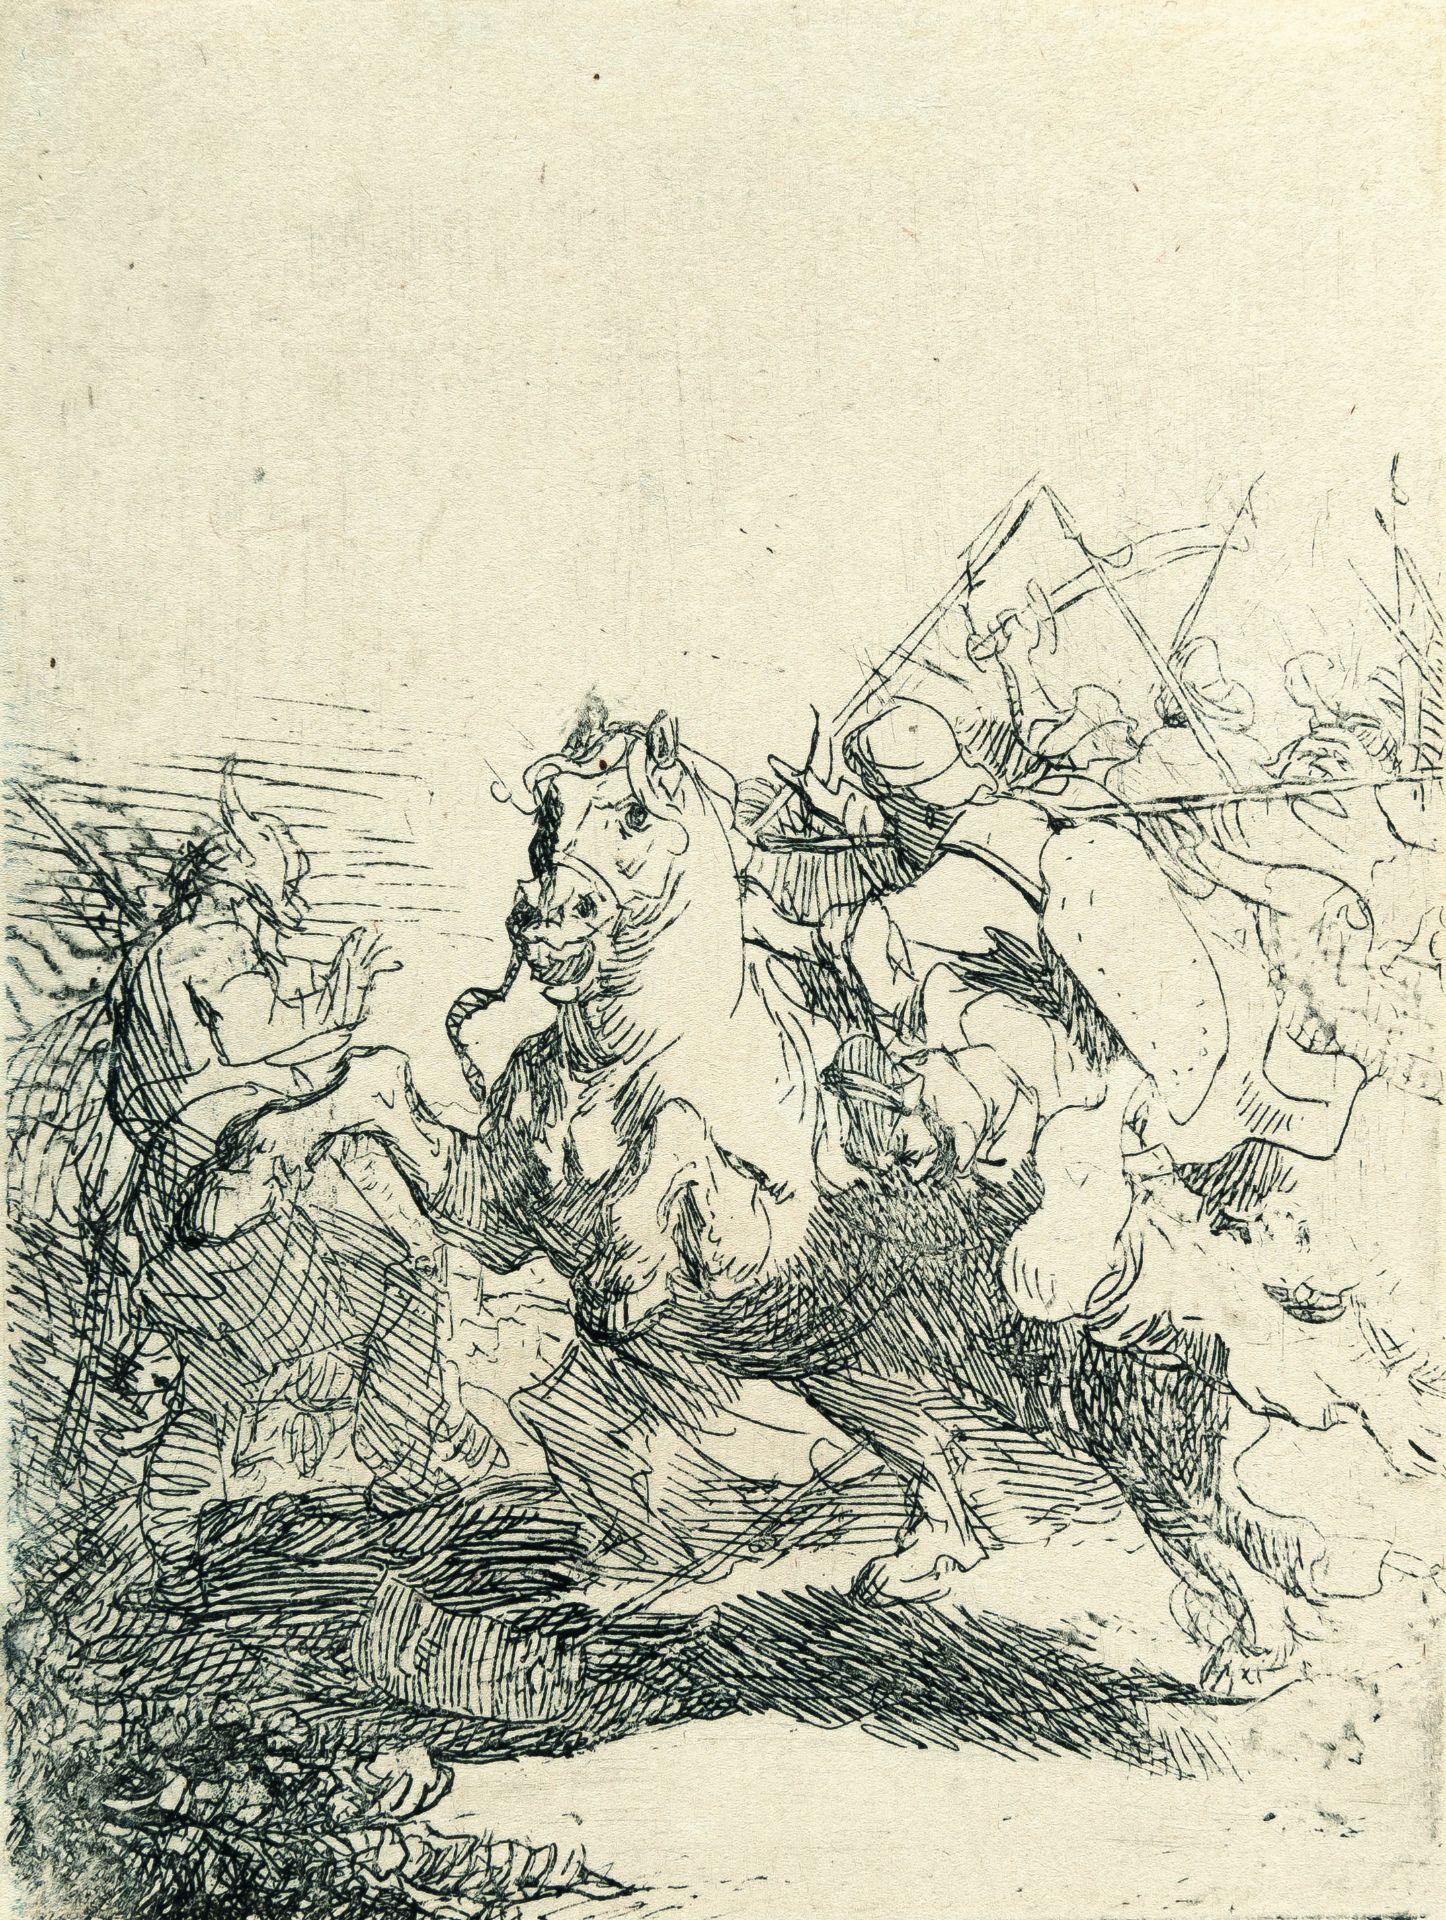 Rembrandt Harmensz. van Rijn (1606 Leiden - Amsterdam 1669) – A Cavalry Fight